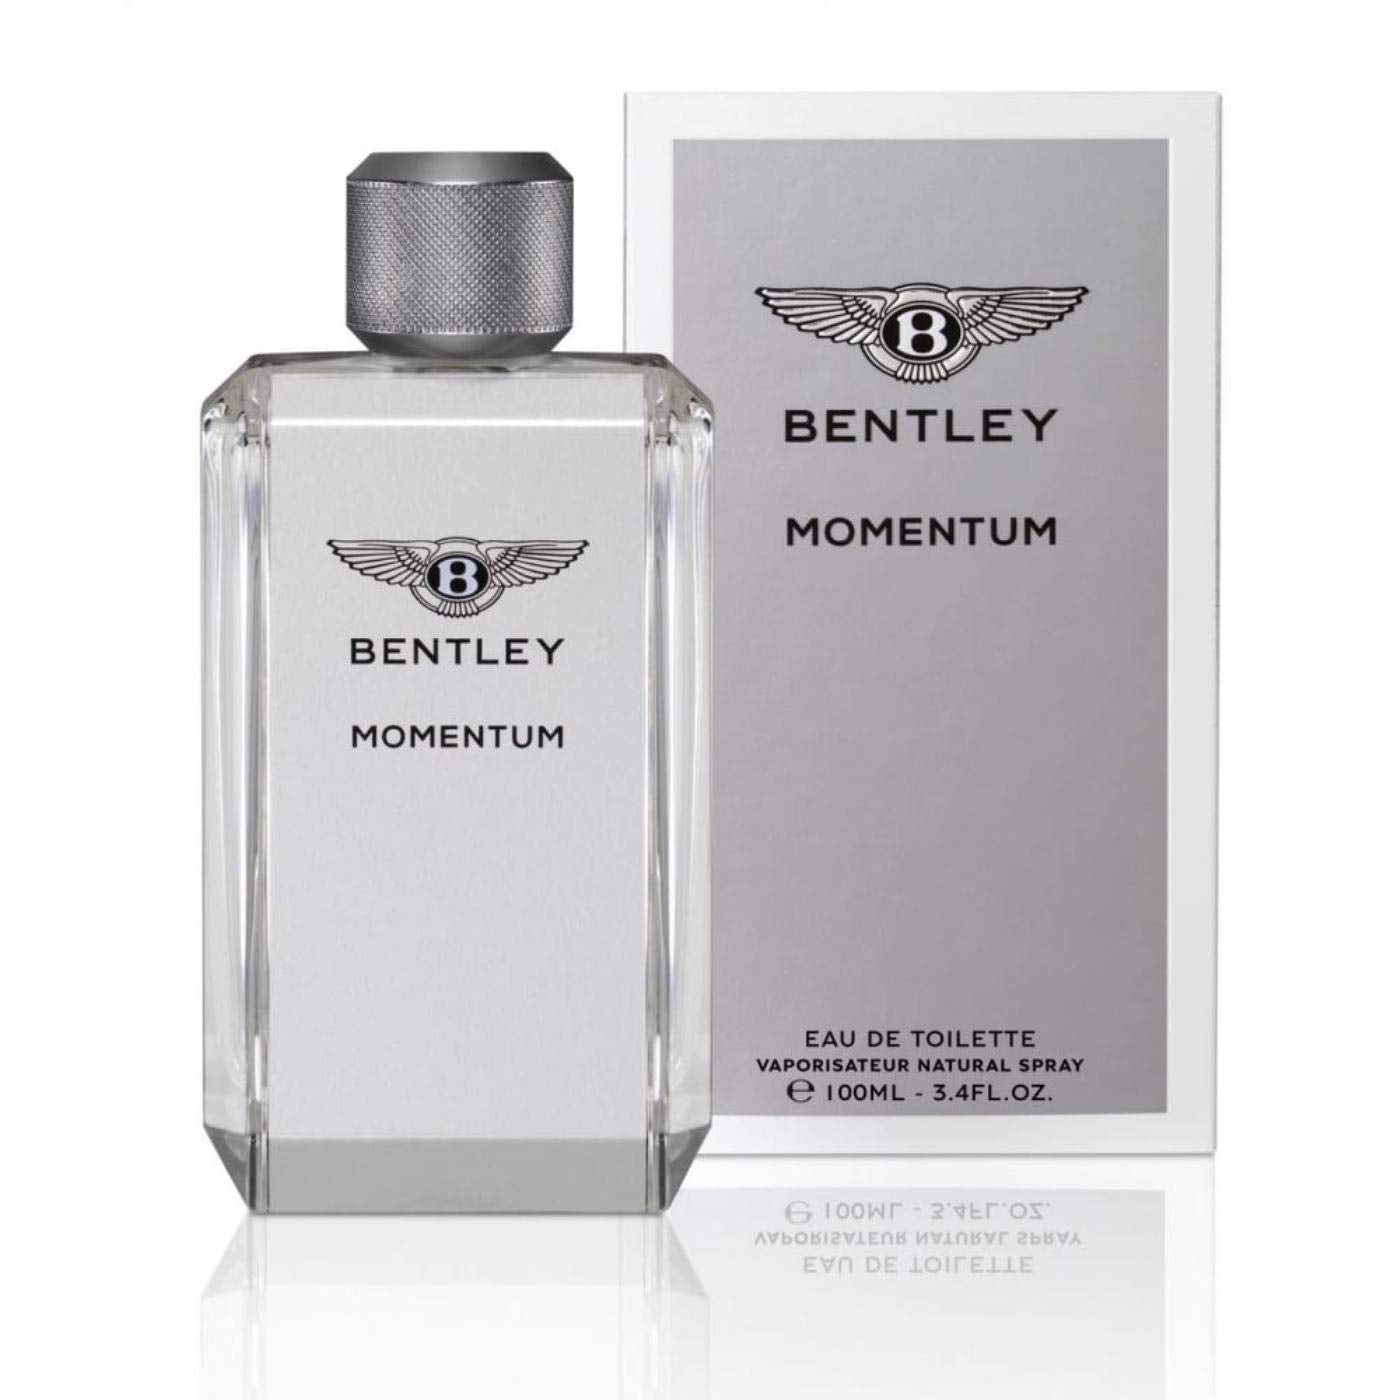 Intense by Bentley for Men 3.4oz Eau De Parfum Spray 